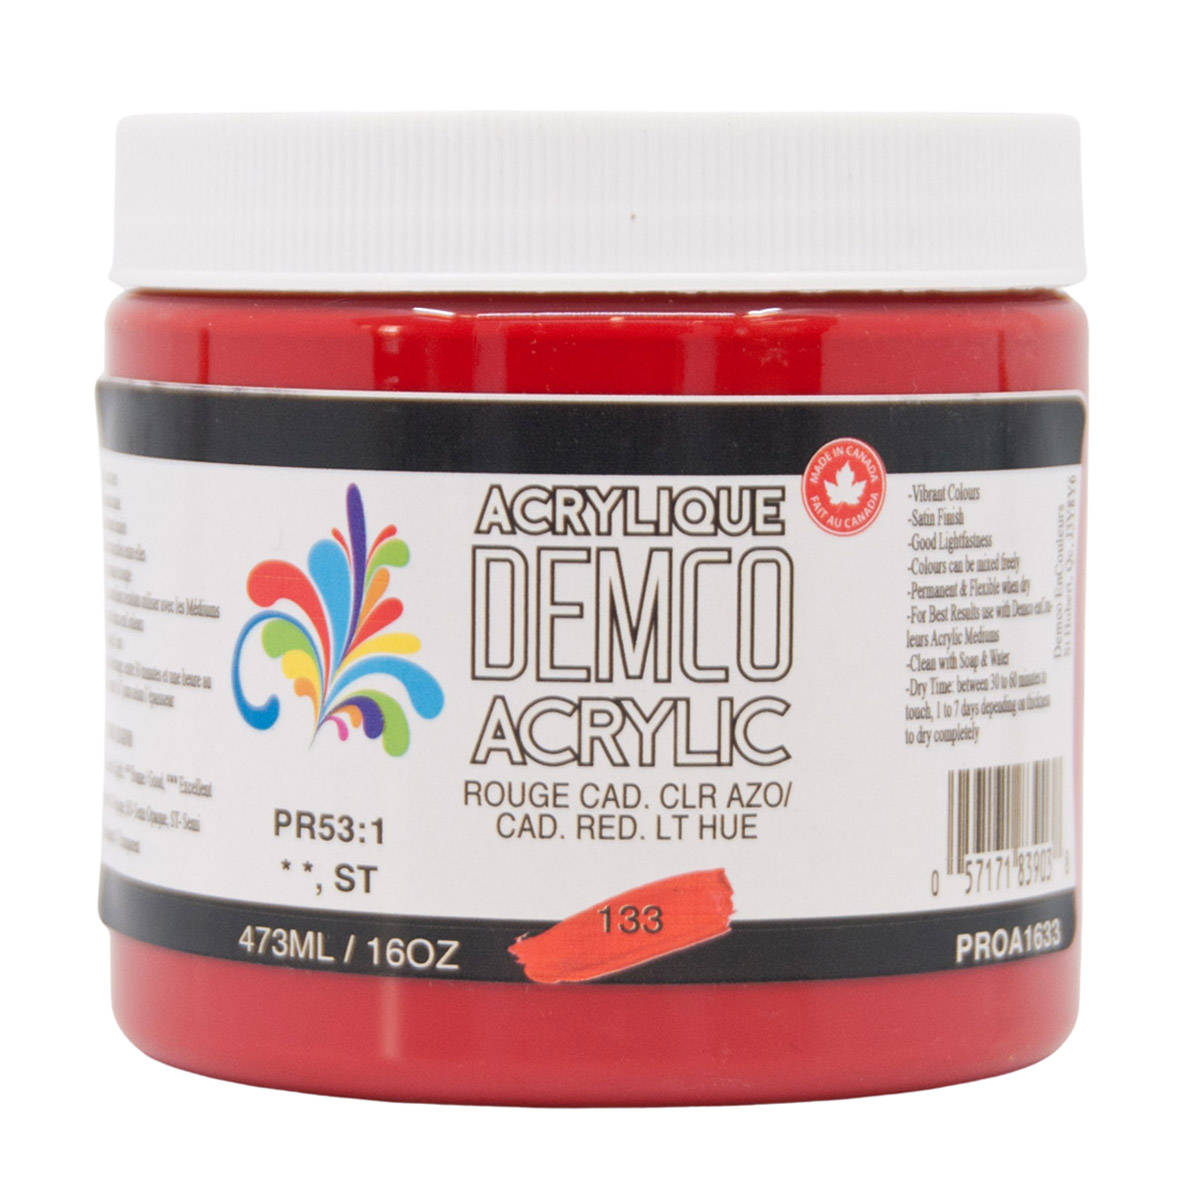 Demco Acrylic Cadmium Red Light Hue 473ml/16oz